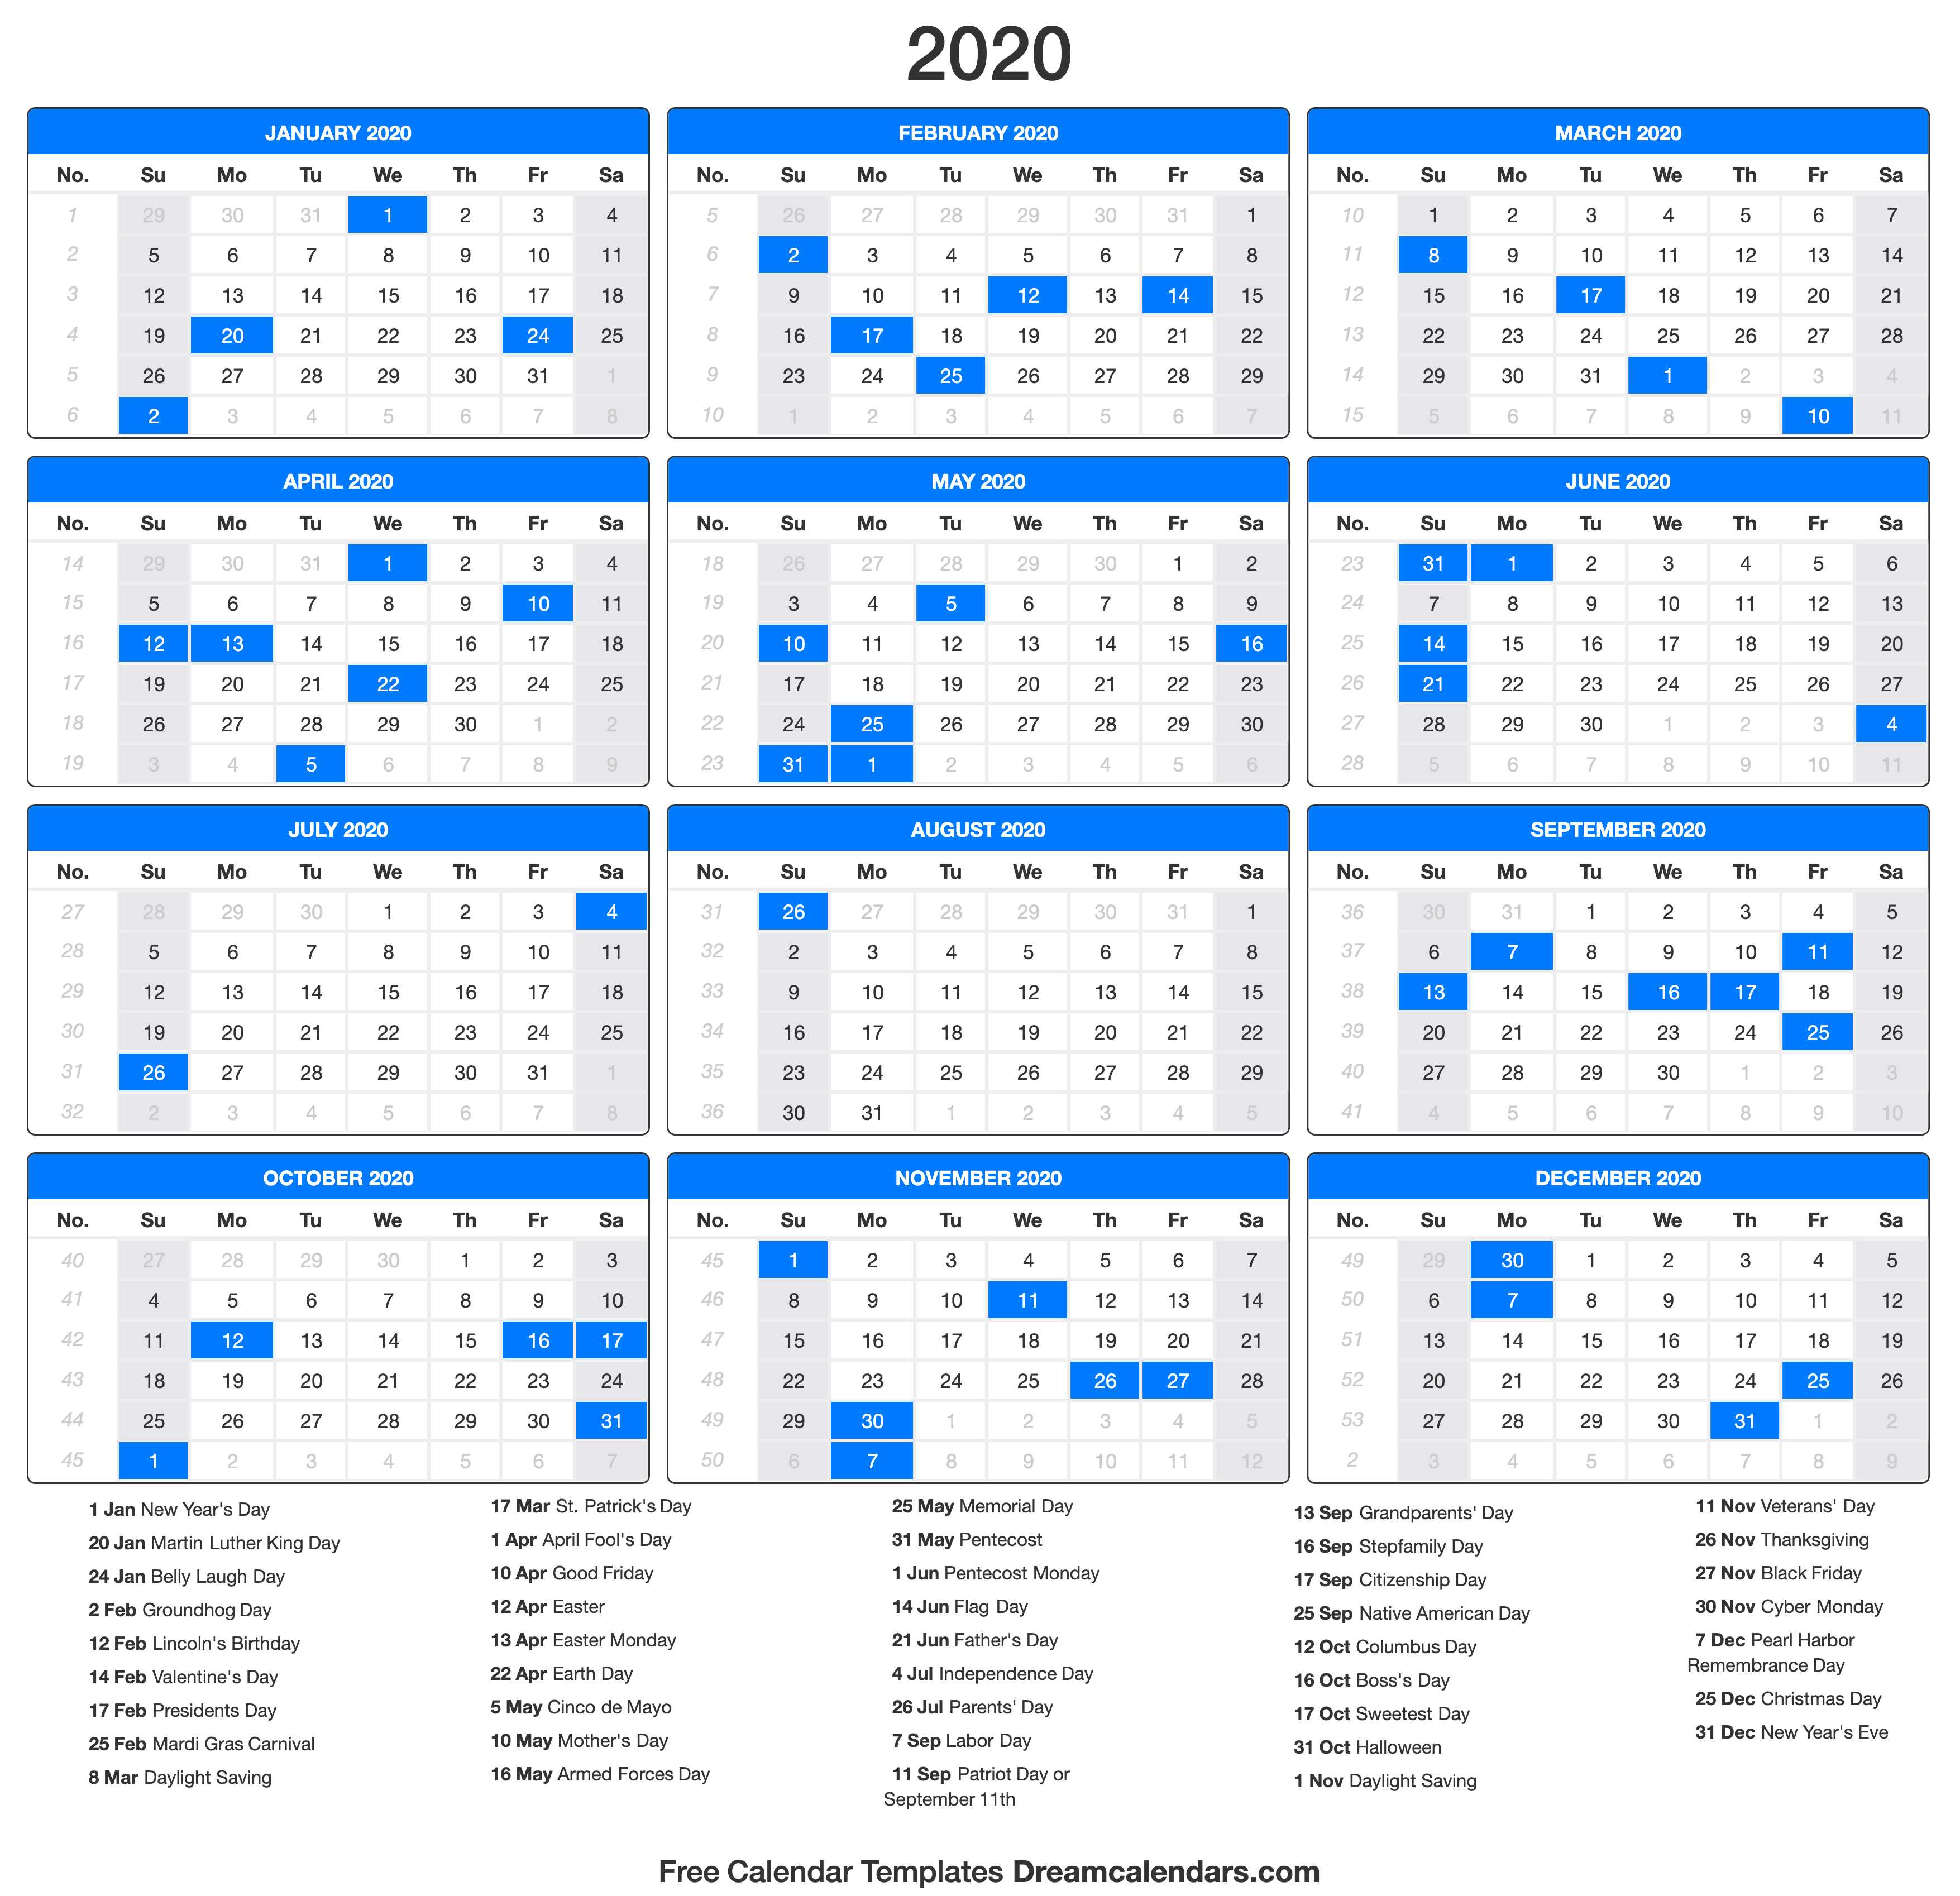 Make a great 2020 calendar free! | Posts by Helena Orstem | Bloglovin’